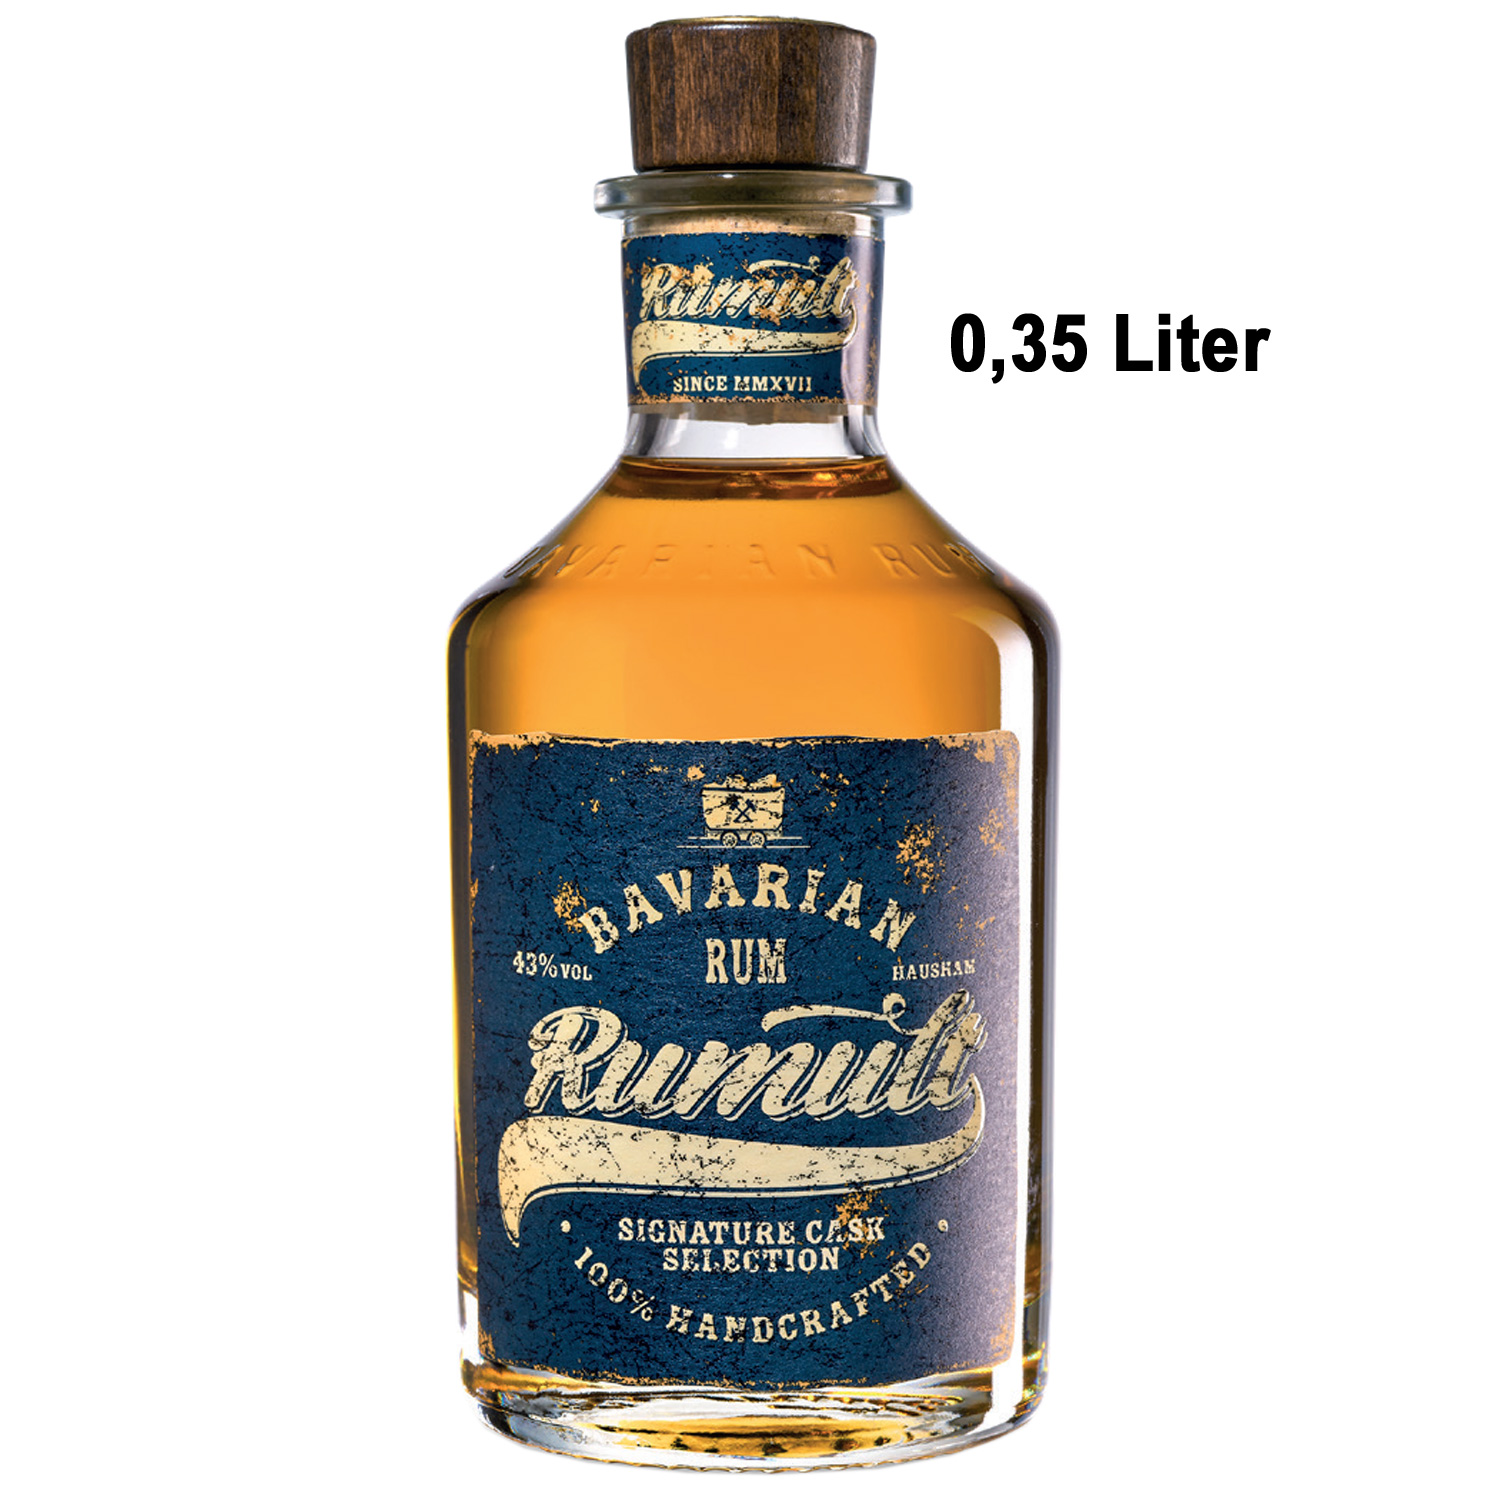 Lantenhammer Rumult Bavarian Rum Signature Cask Selection